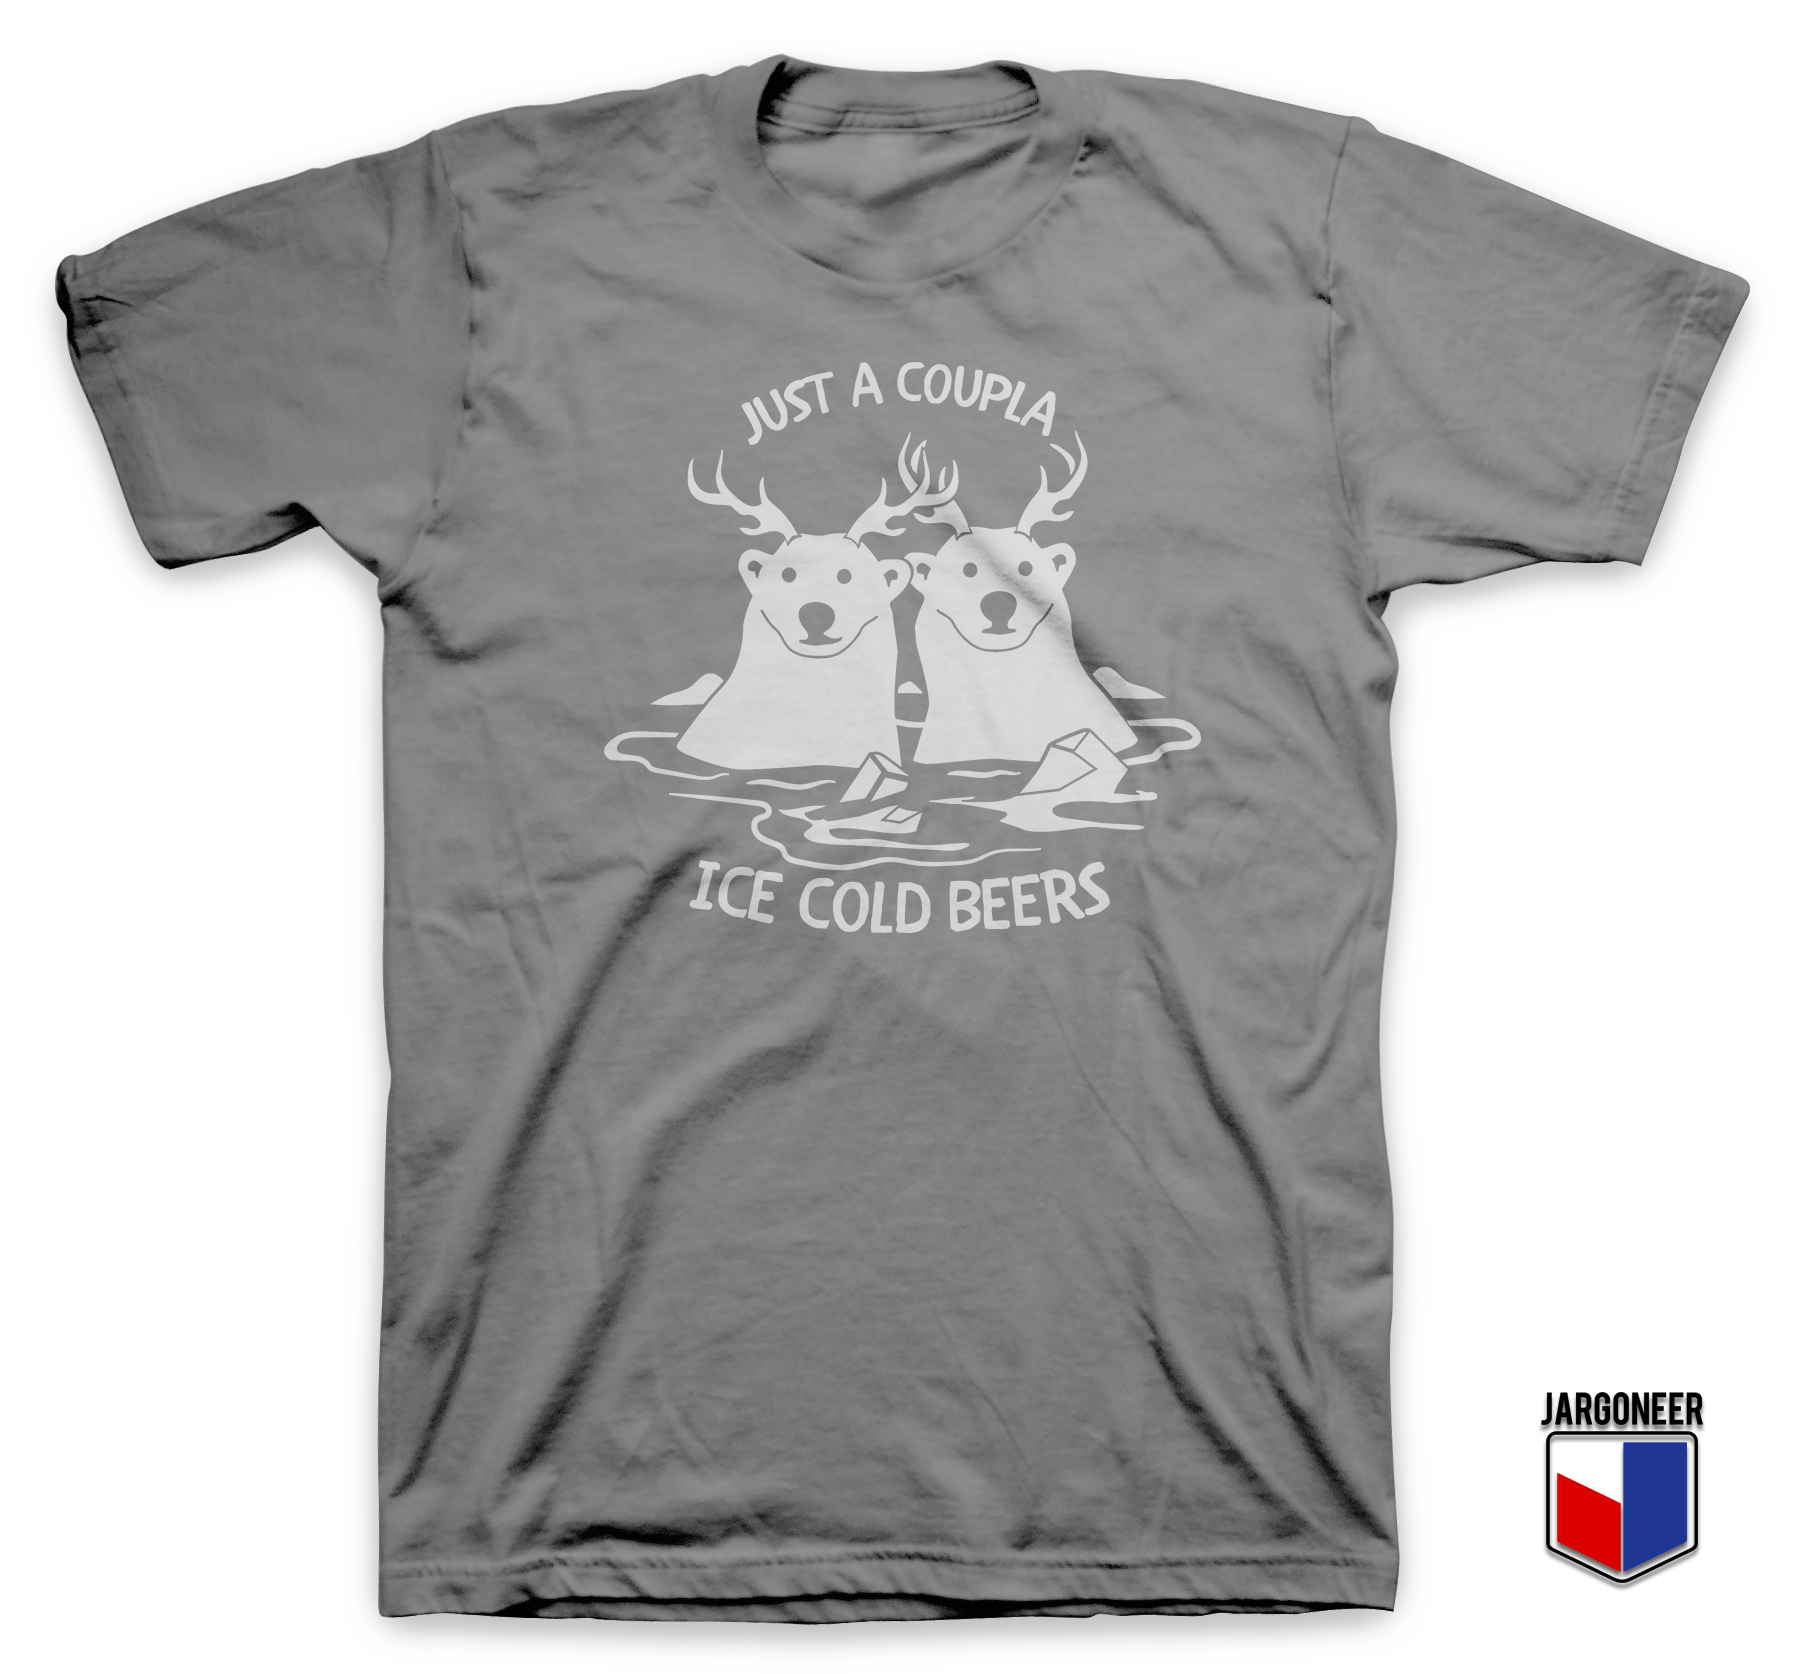 Ice Cold Deers - Shop Unique Graphic Cool Shirt Designs